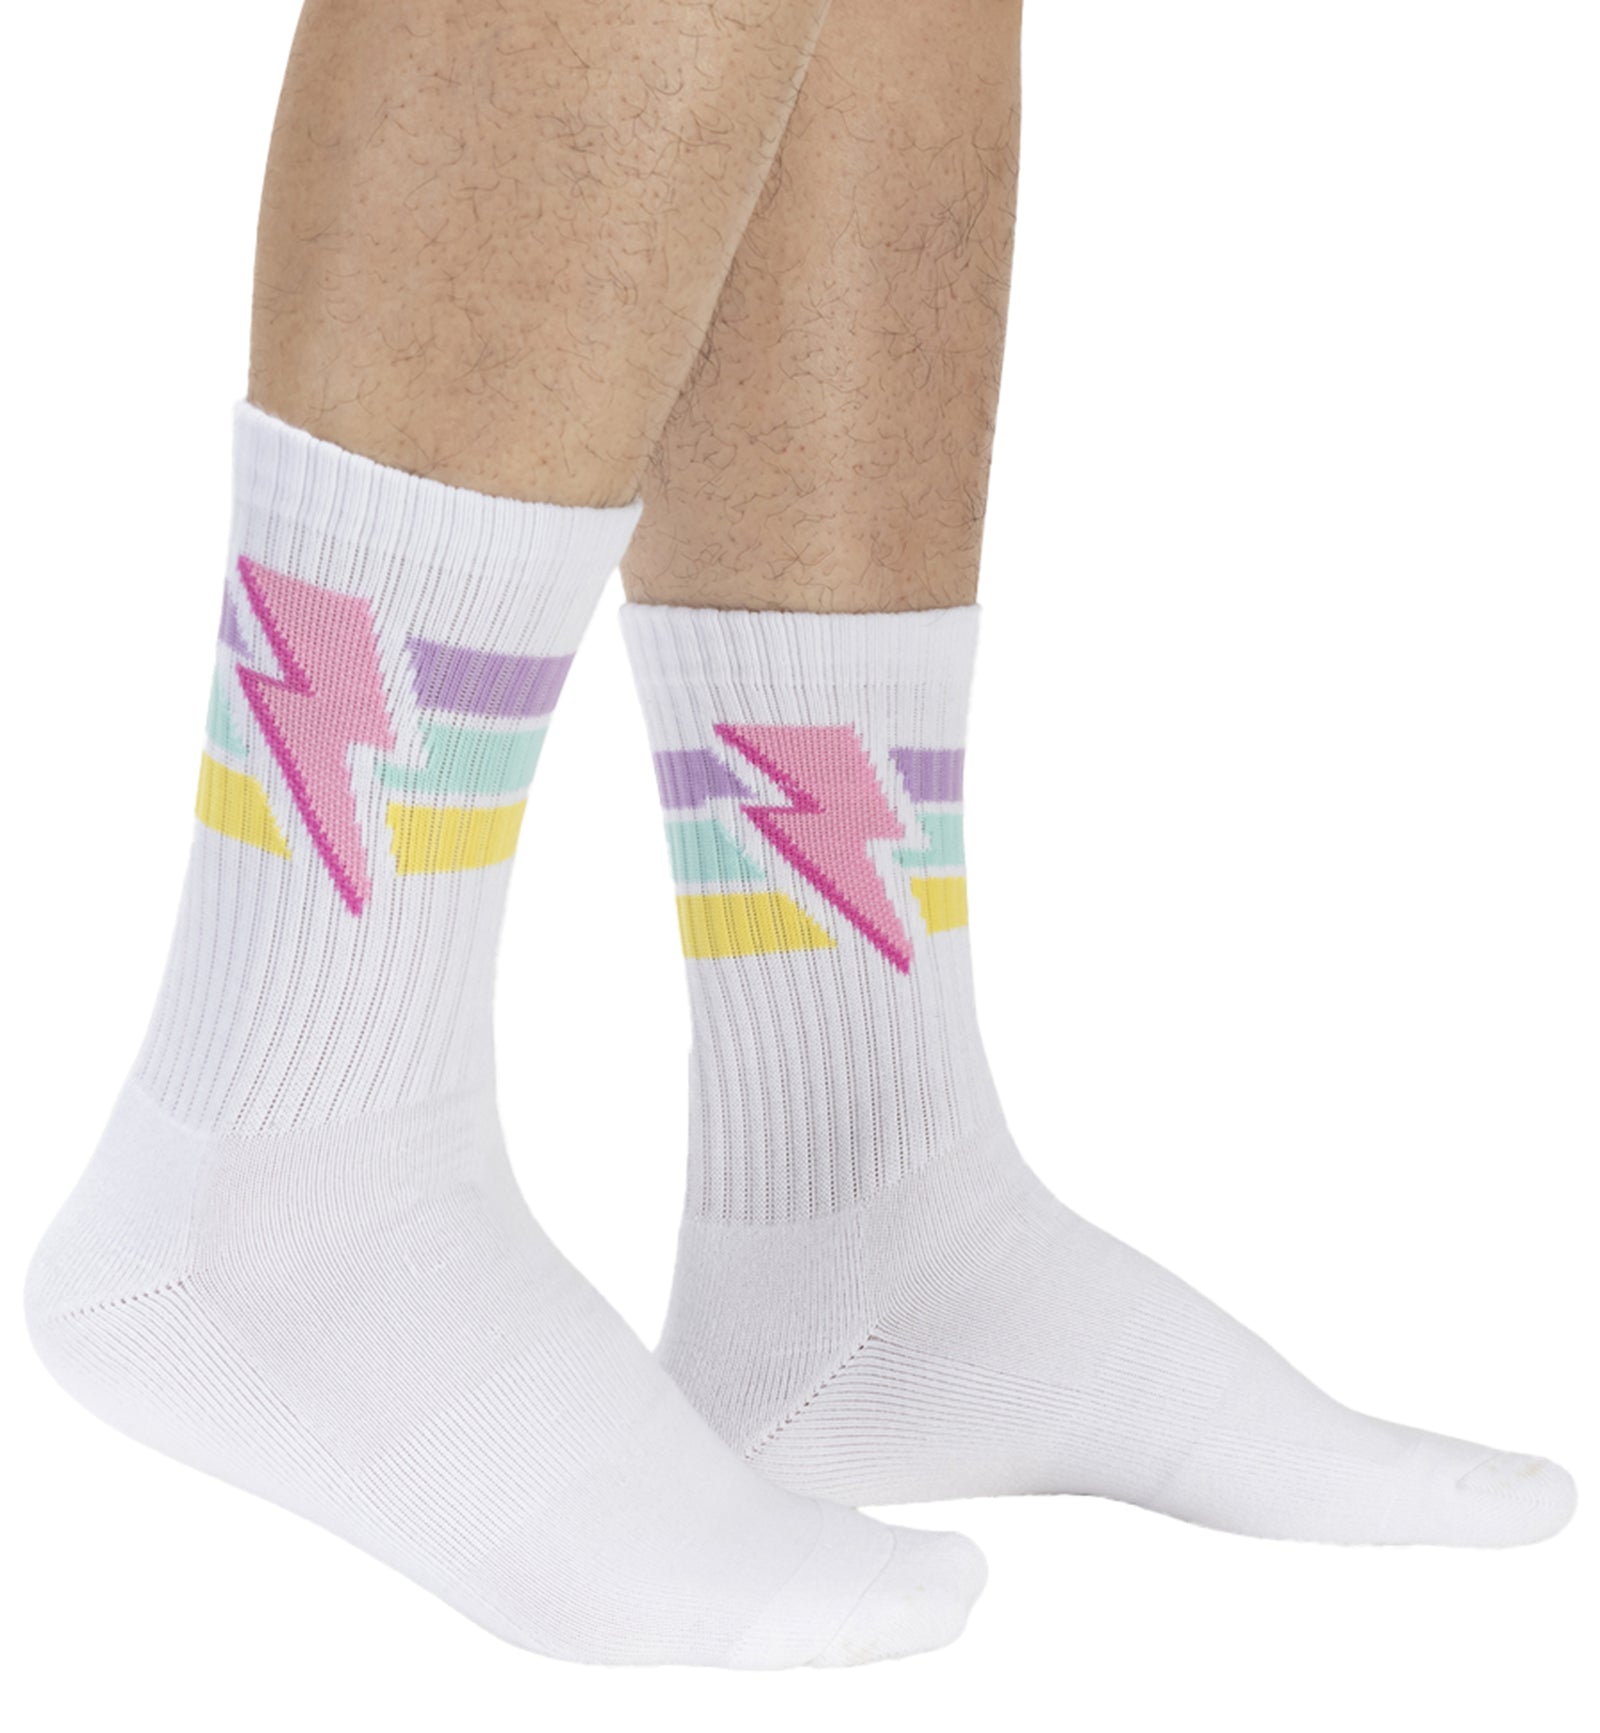 SOCK it to me Athletic Ribbed Crew Socks (R0010-2),Thunderstruck (White) - Thunderstruck (White),One Size